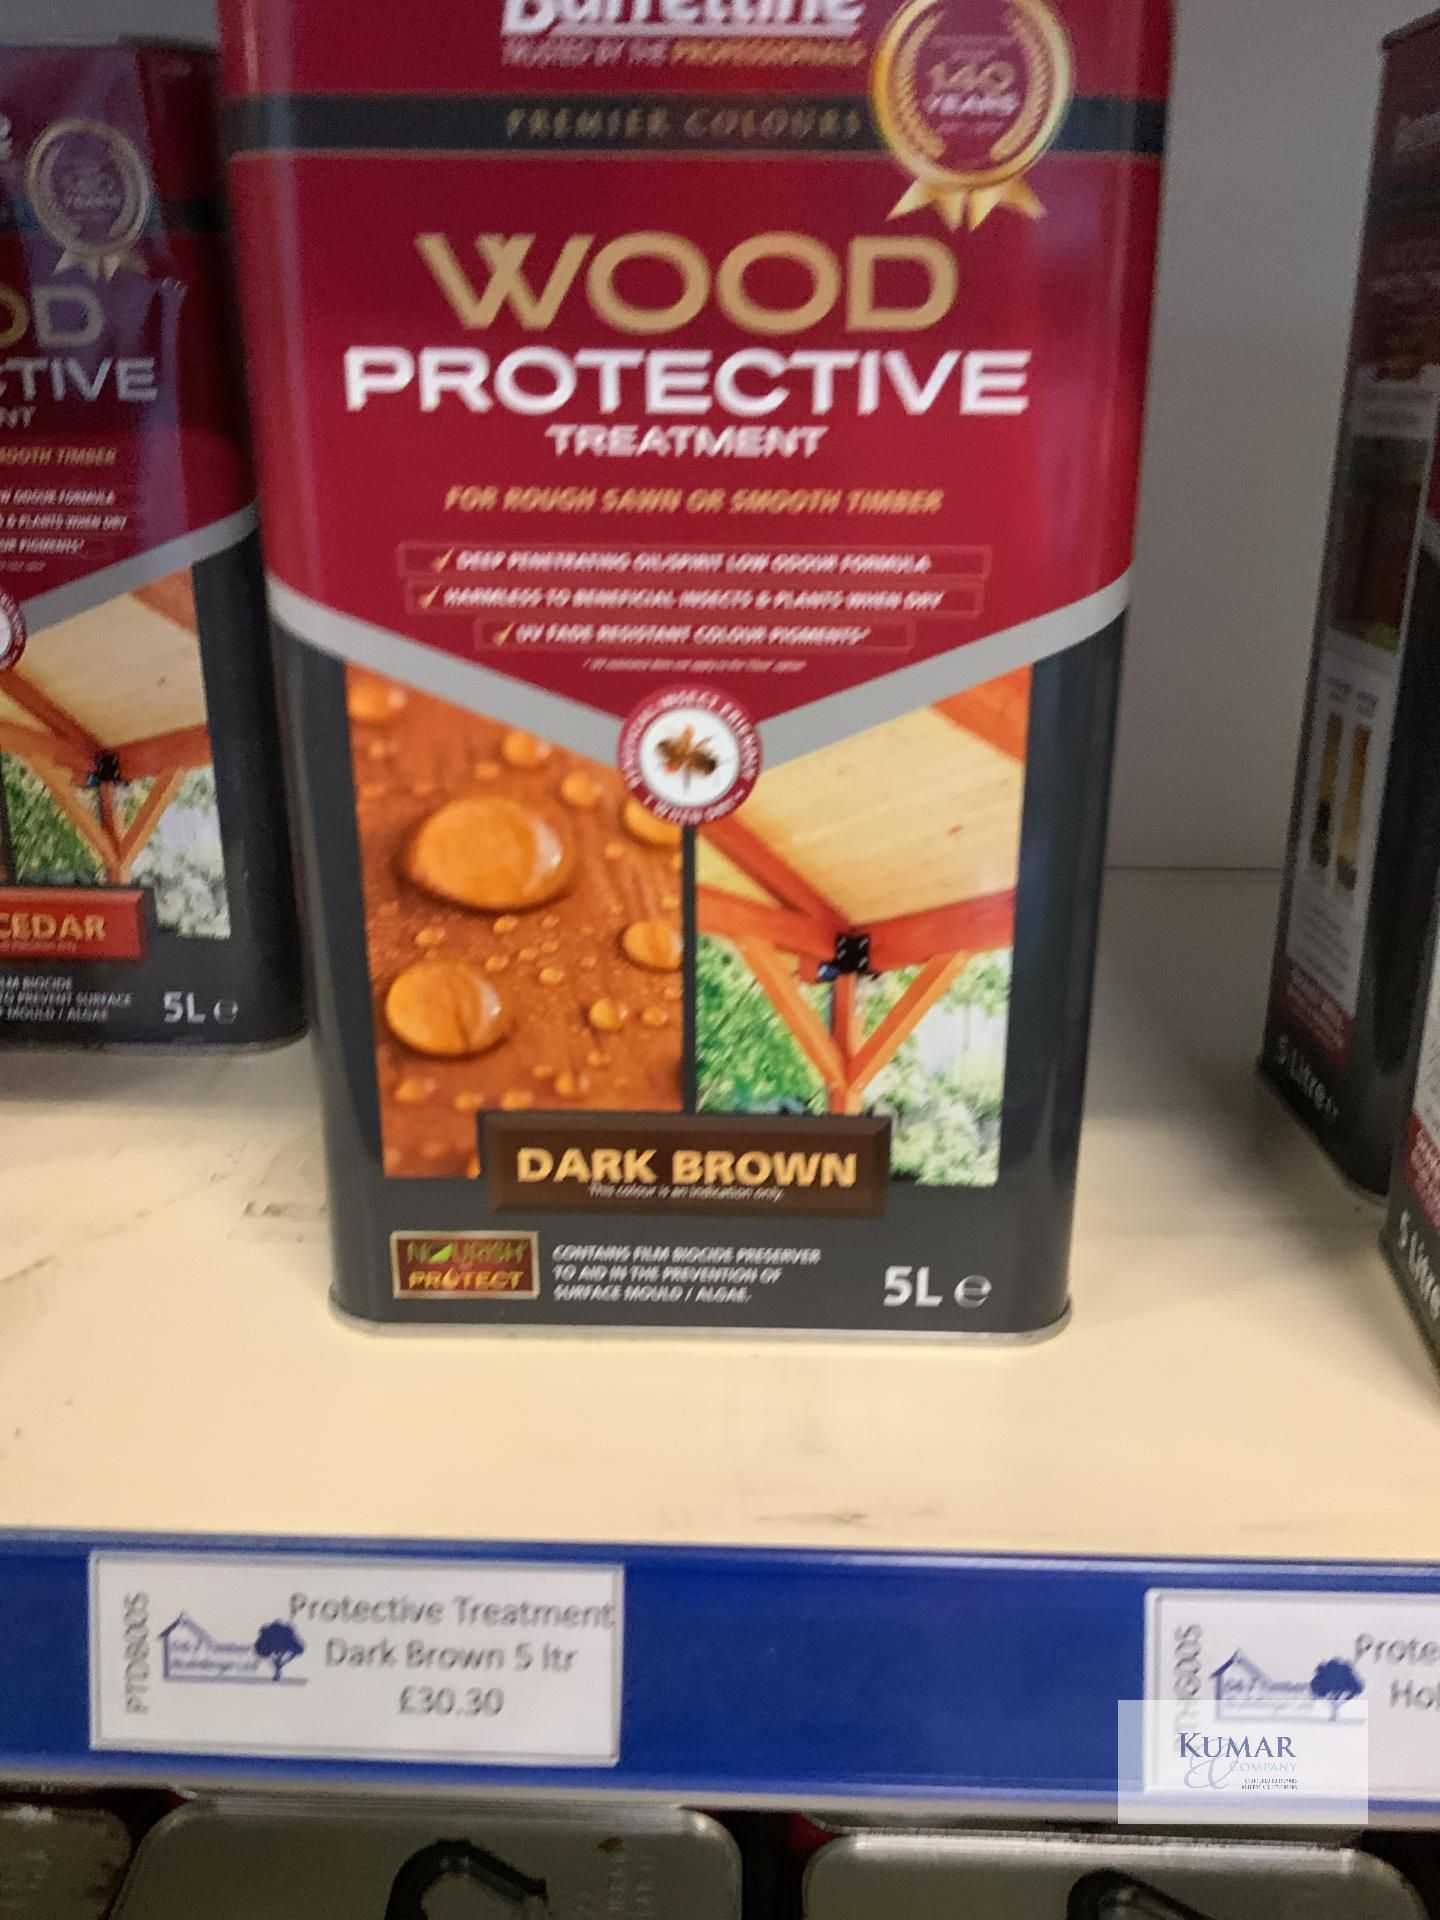 2: Barrattine Wood Protective Treatment Dark Brown (RRP £30.30 each)